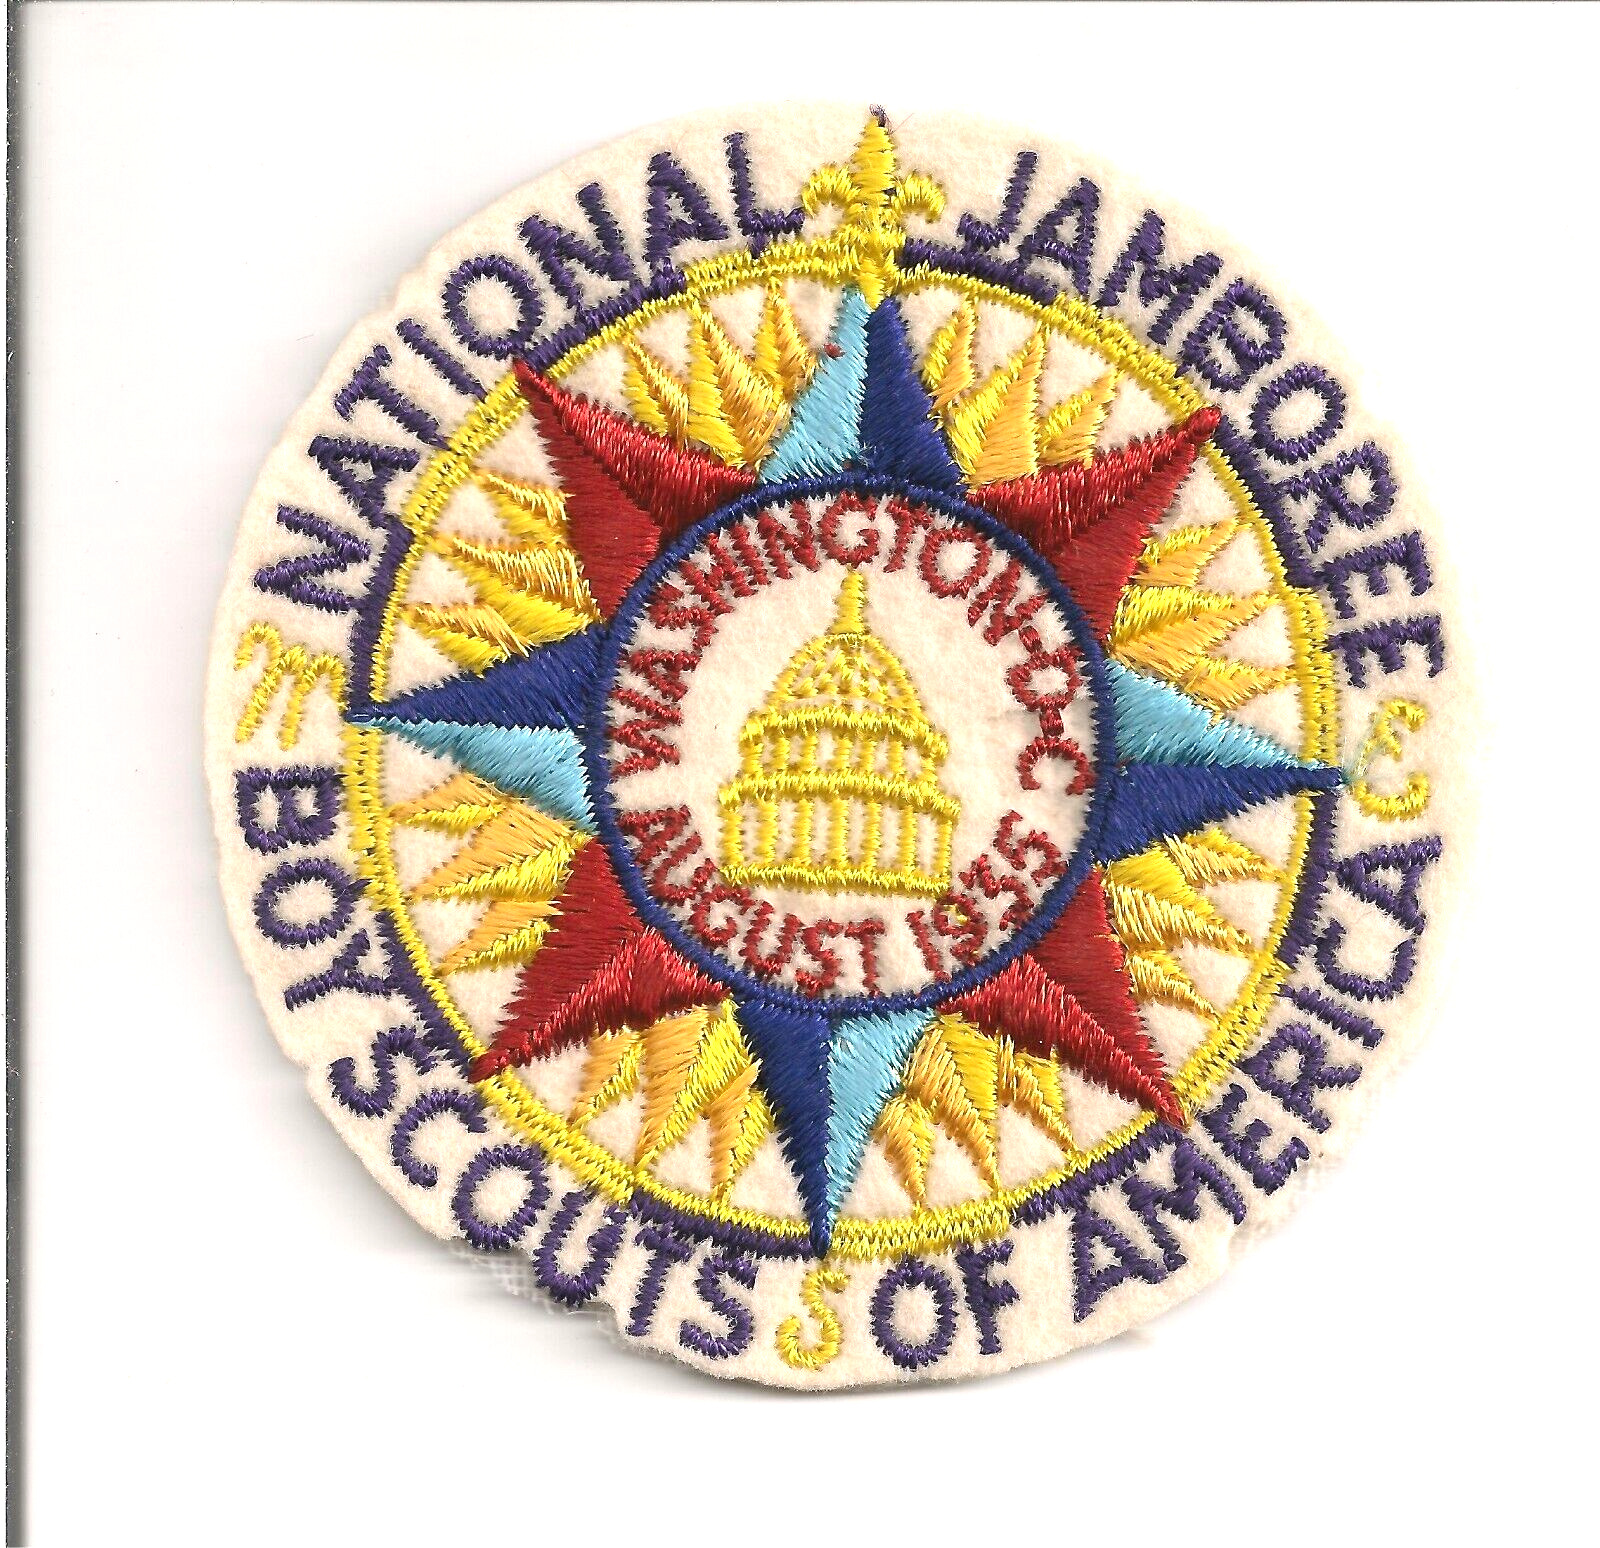 Original 1935 National Jamboree Pocket Patch -  (not a reproduction)